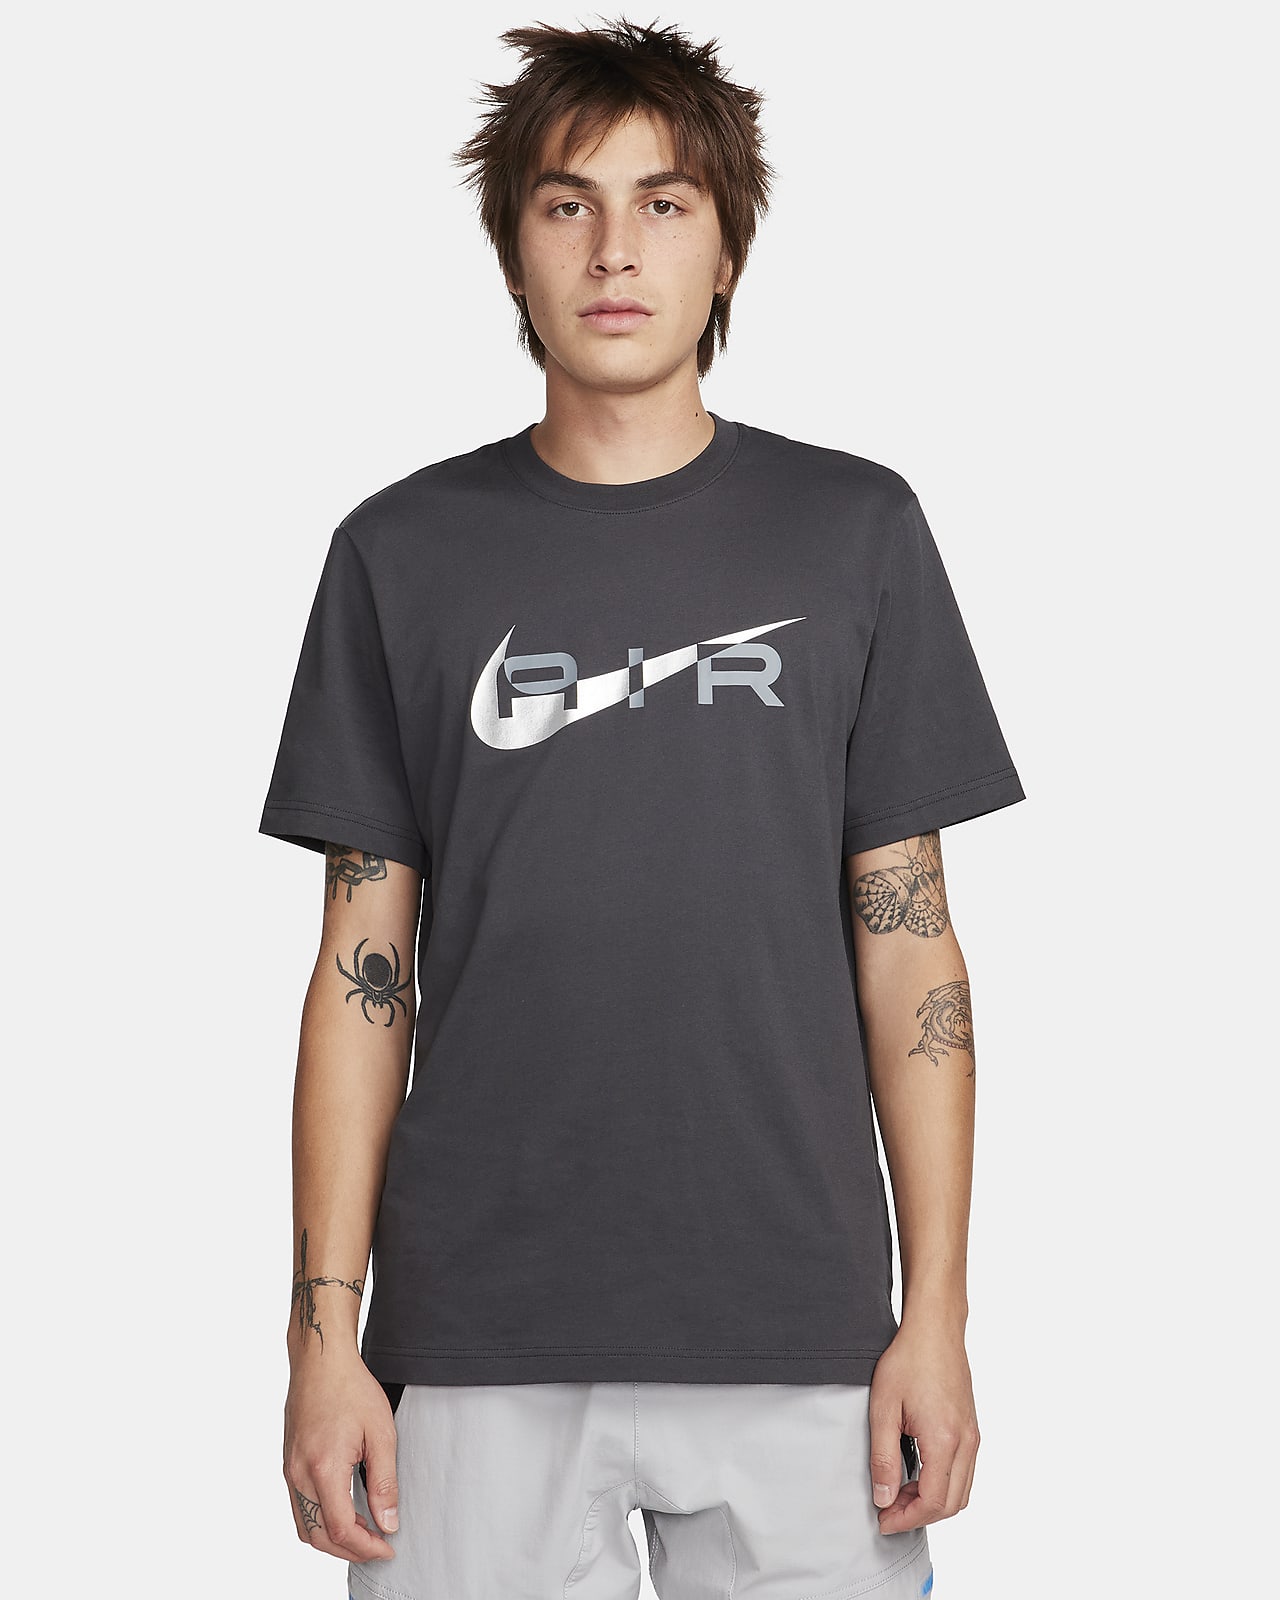 Les meilleurs tee-shirts à motif Nike pour garçon. Nike CA